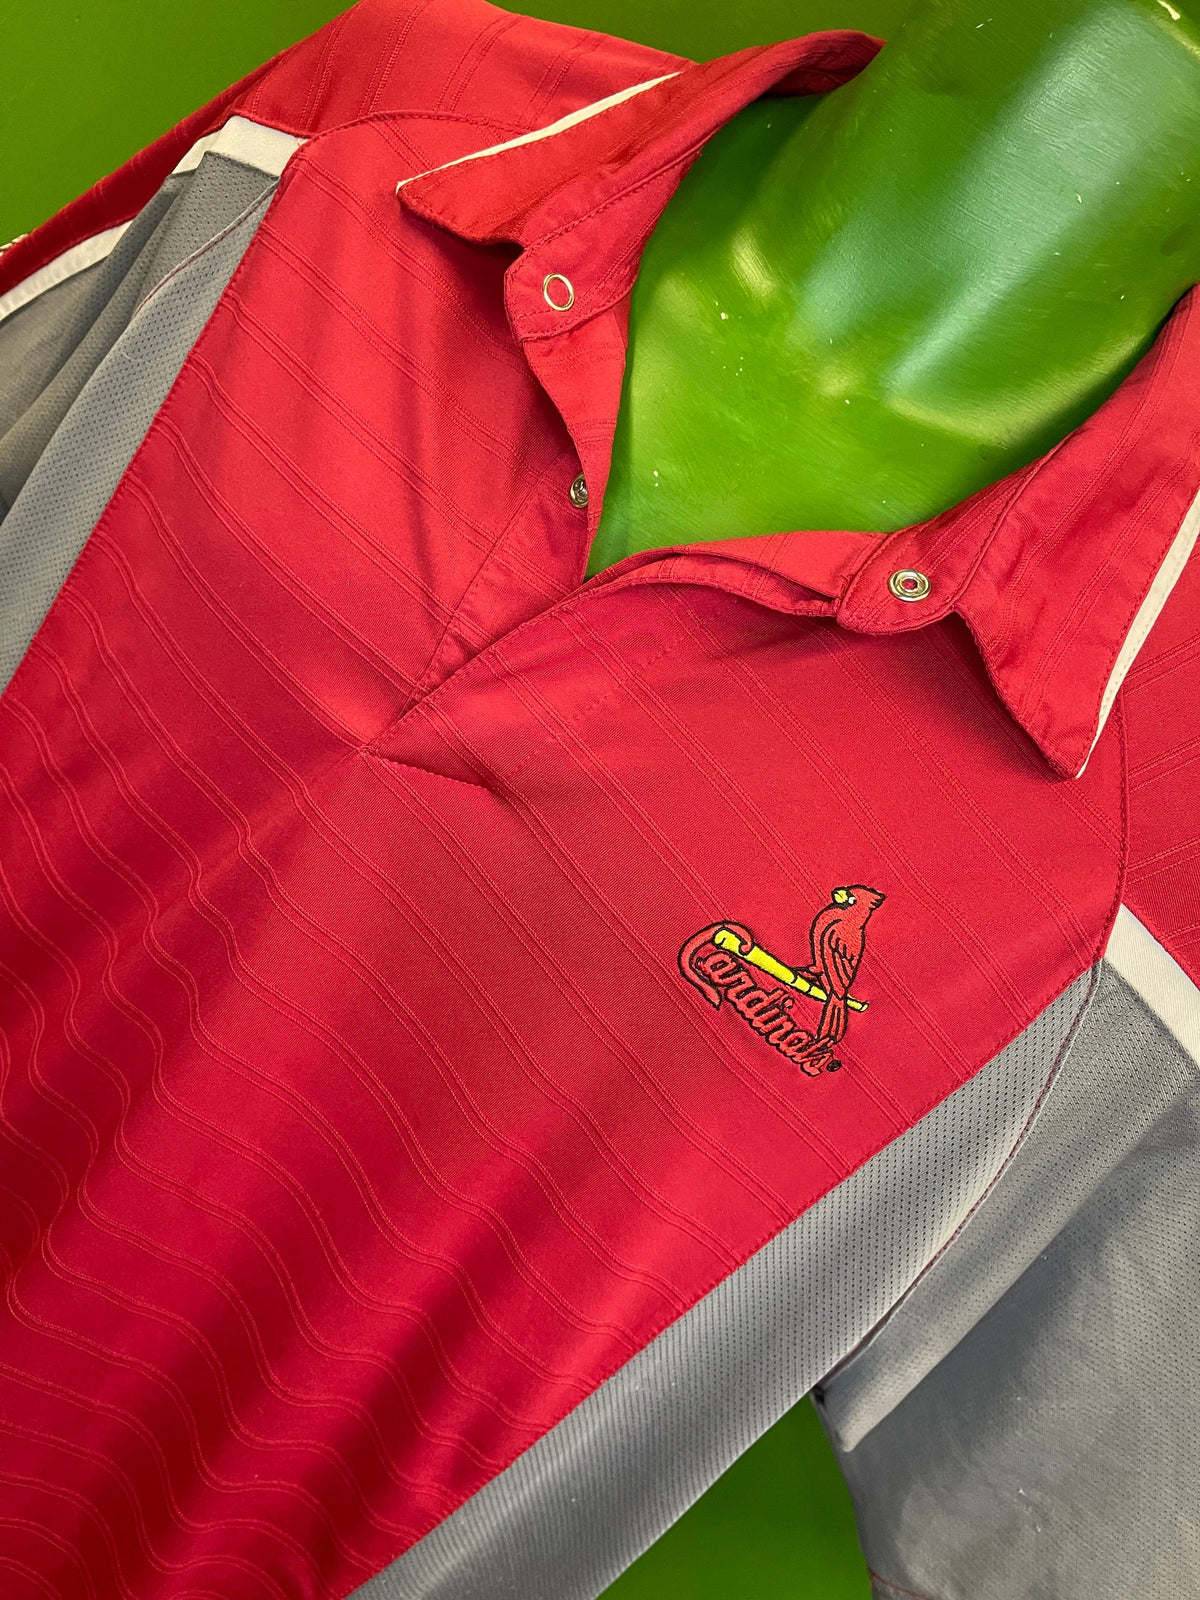 MLB St. Louis Cardinals Striped "Event Staff" Golf Polo Shirt Men's Large